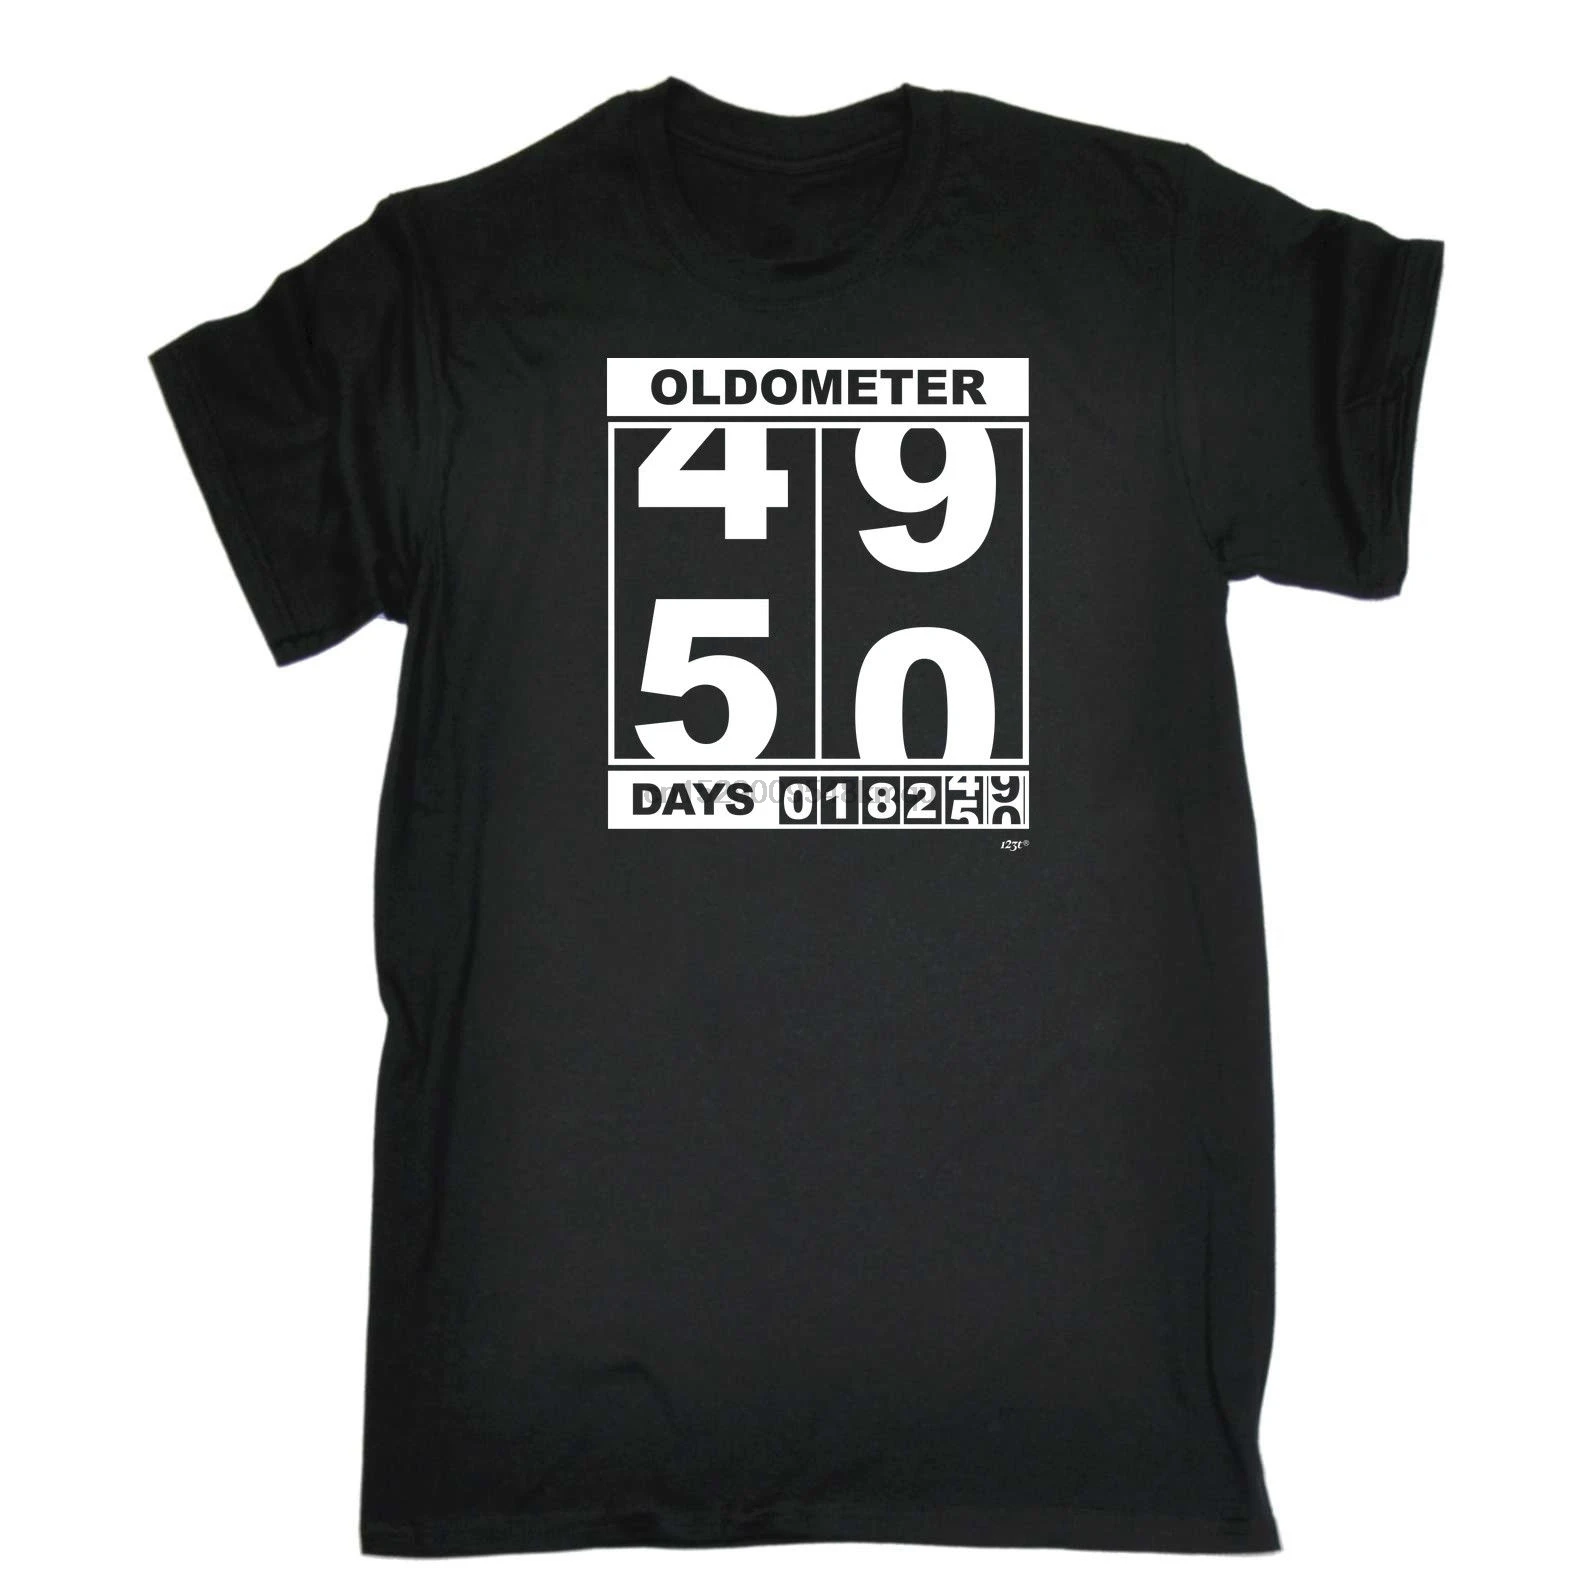 Забавная новинка Мужская футболка футболка-Oldometer 4950 дней на заказ с принтом в